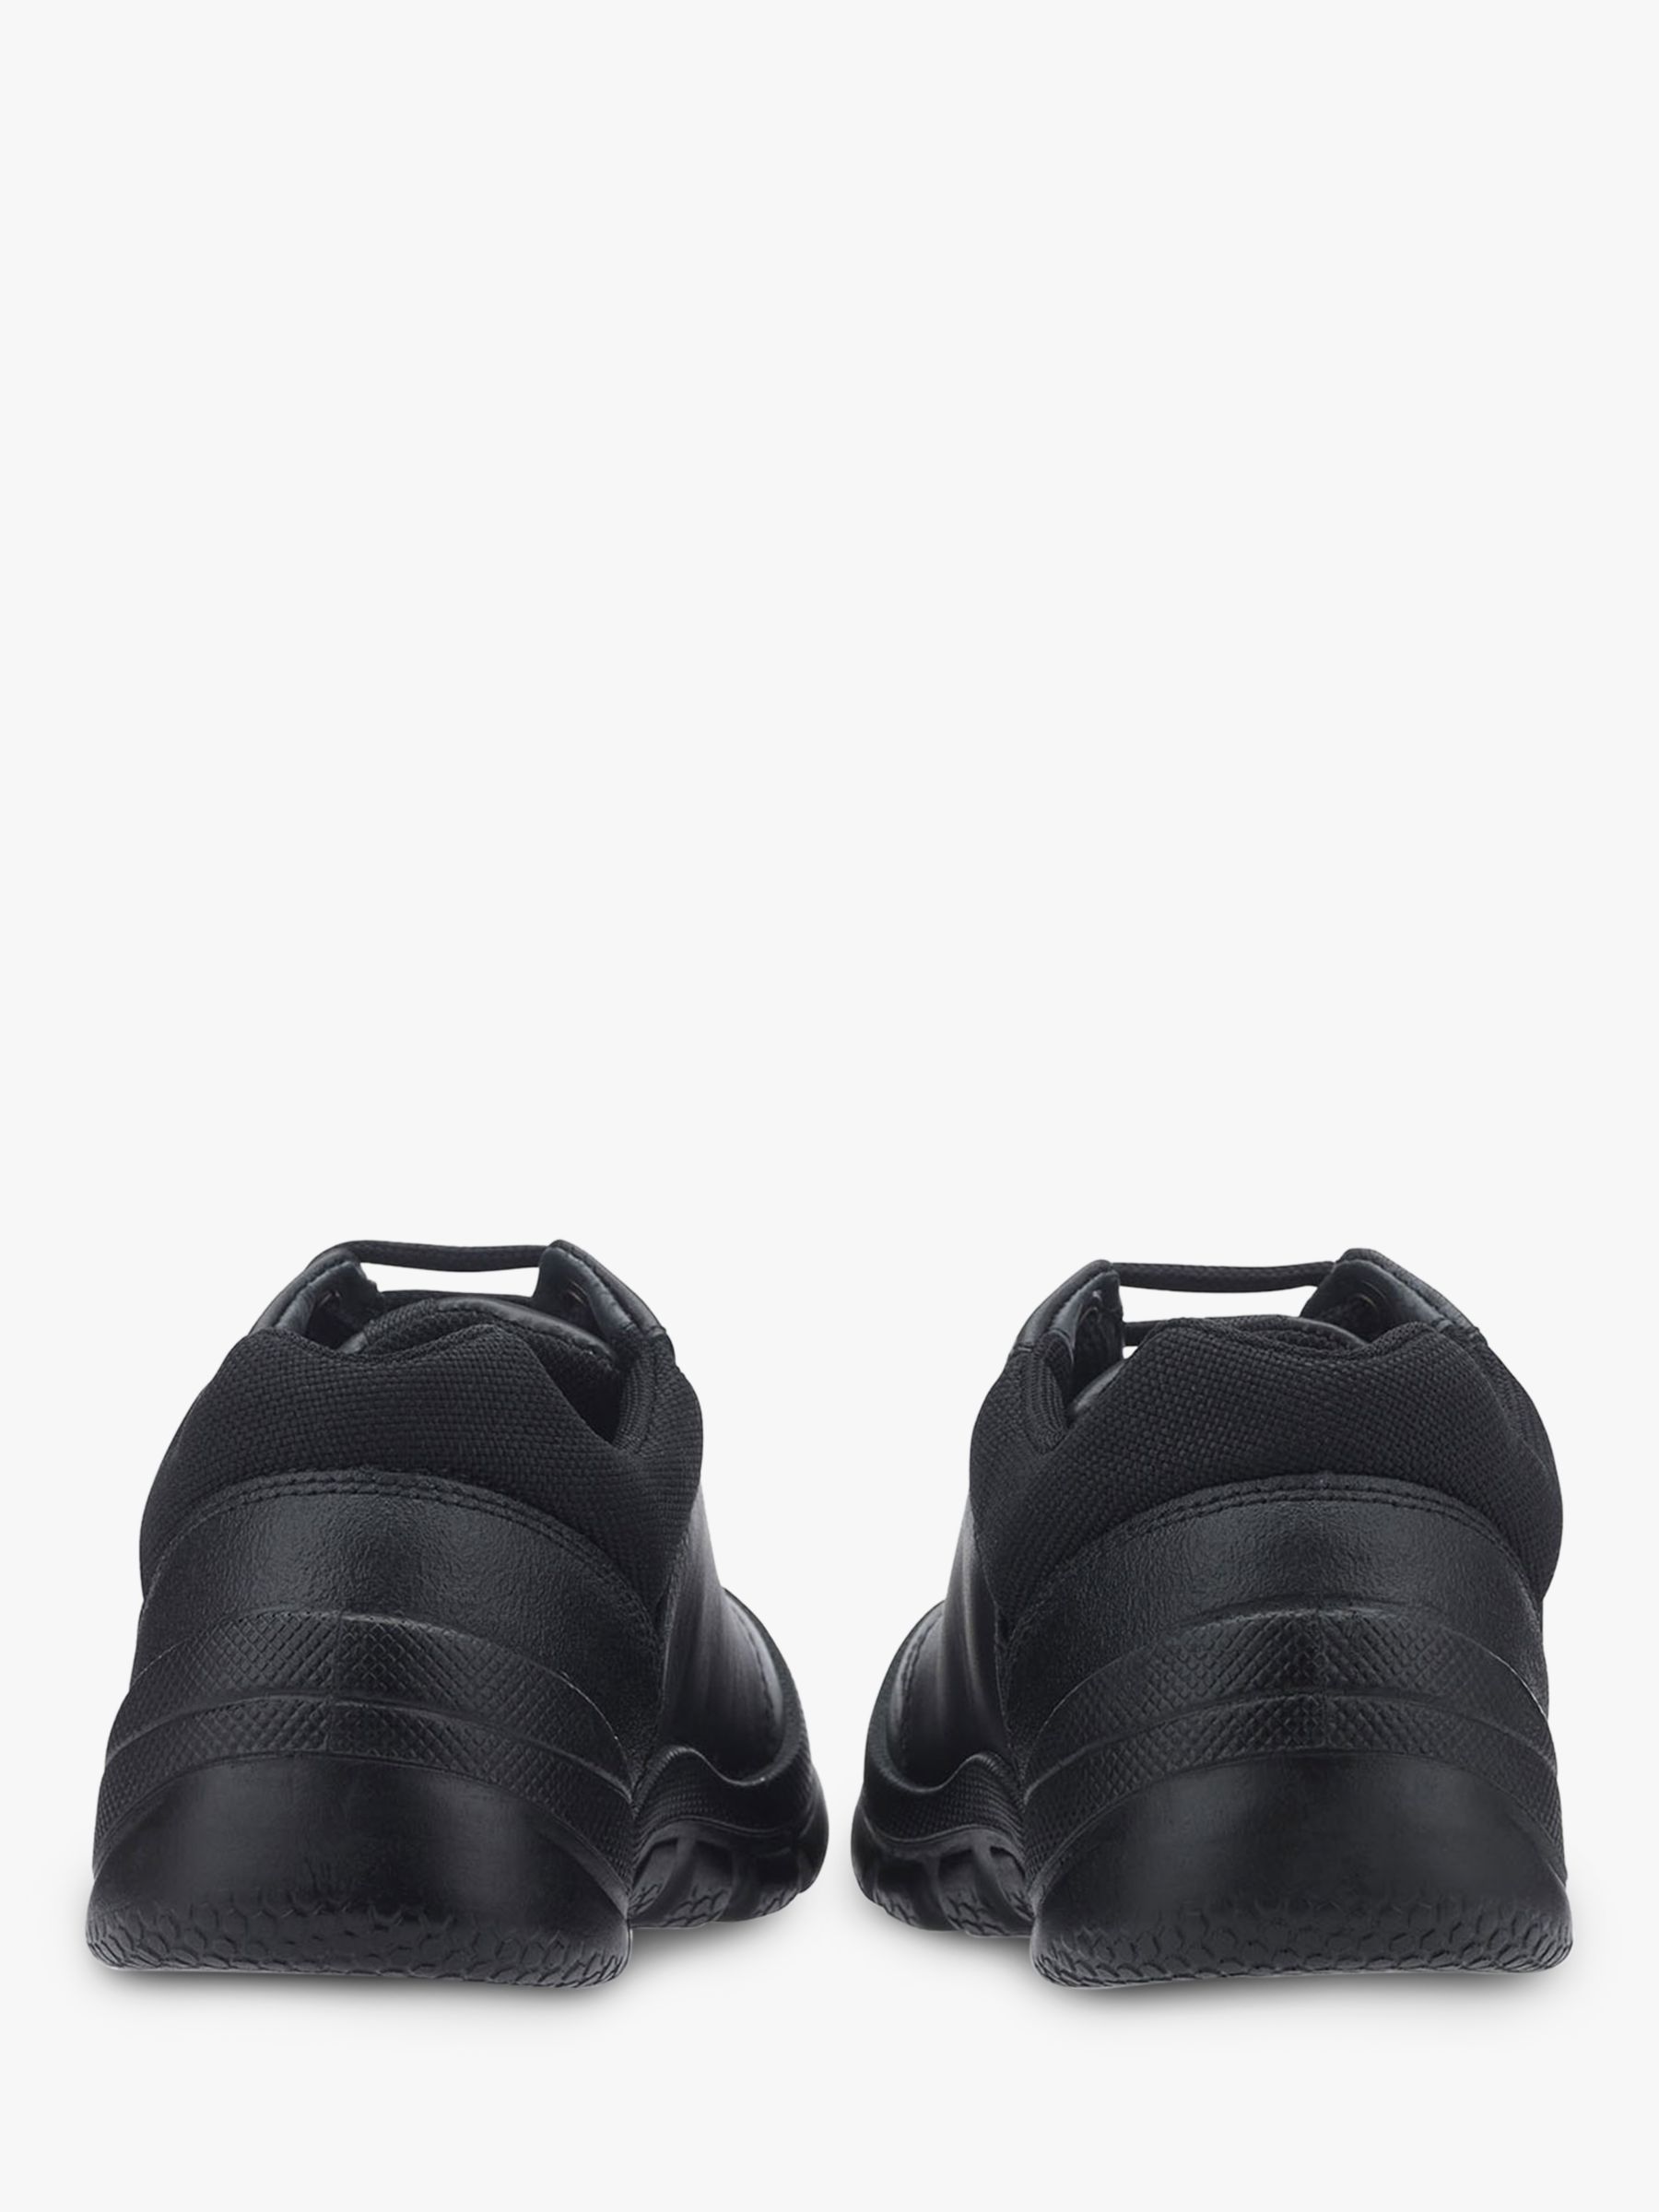 Start-Rite Kids' Rhino Sherman Shoes, Black, 3F